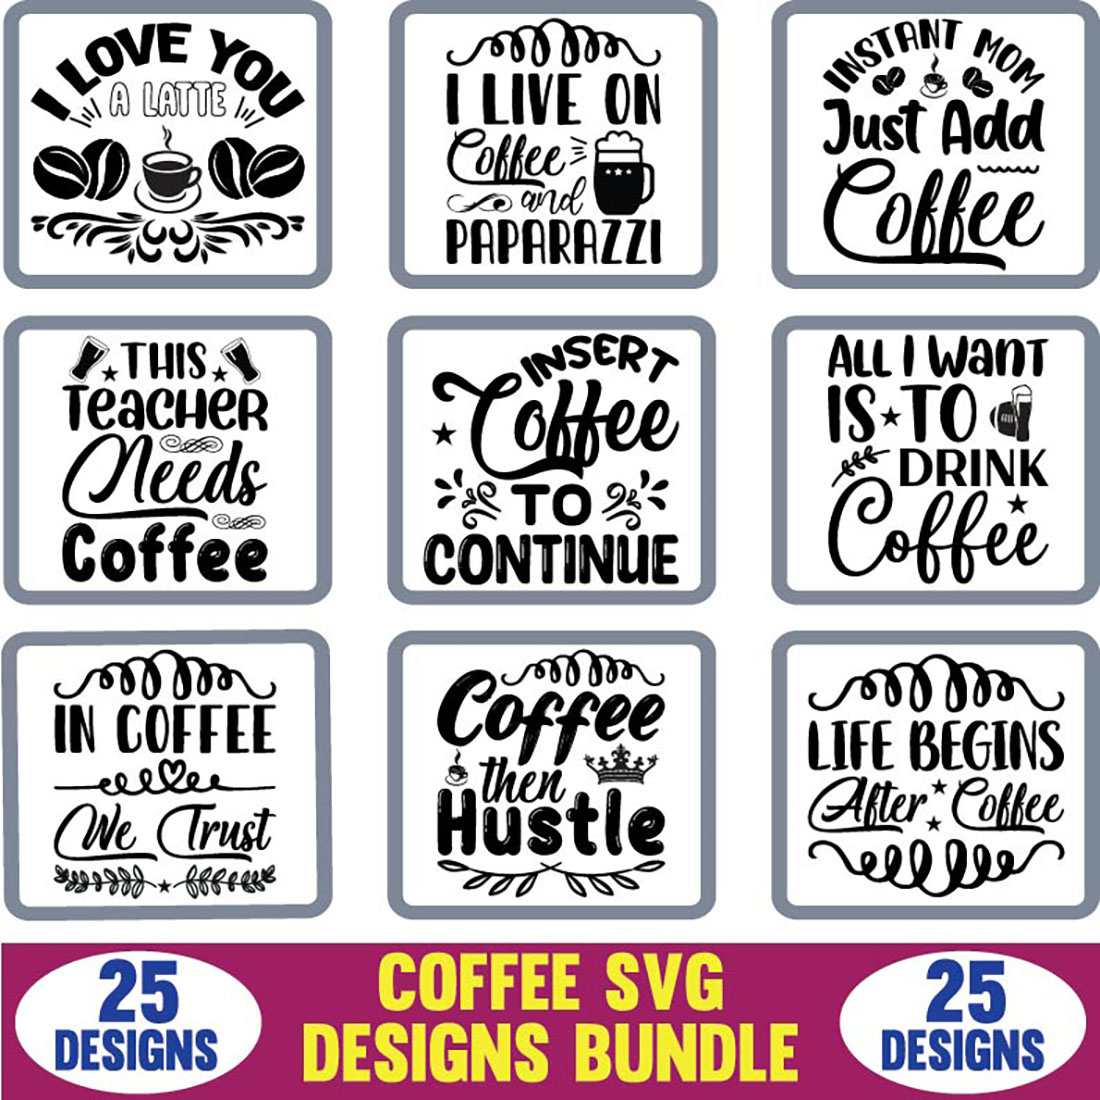 Coffee SVG Designs Bundle cover image.